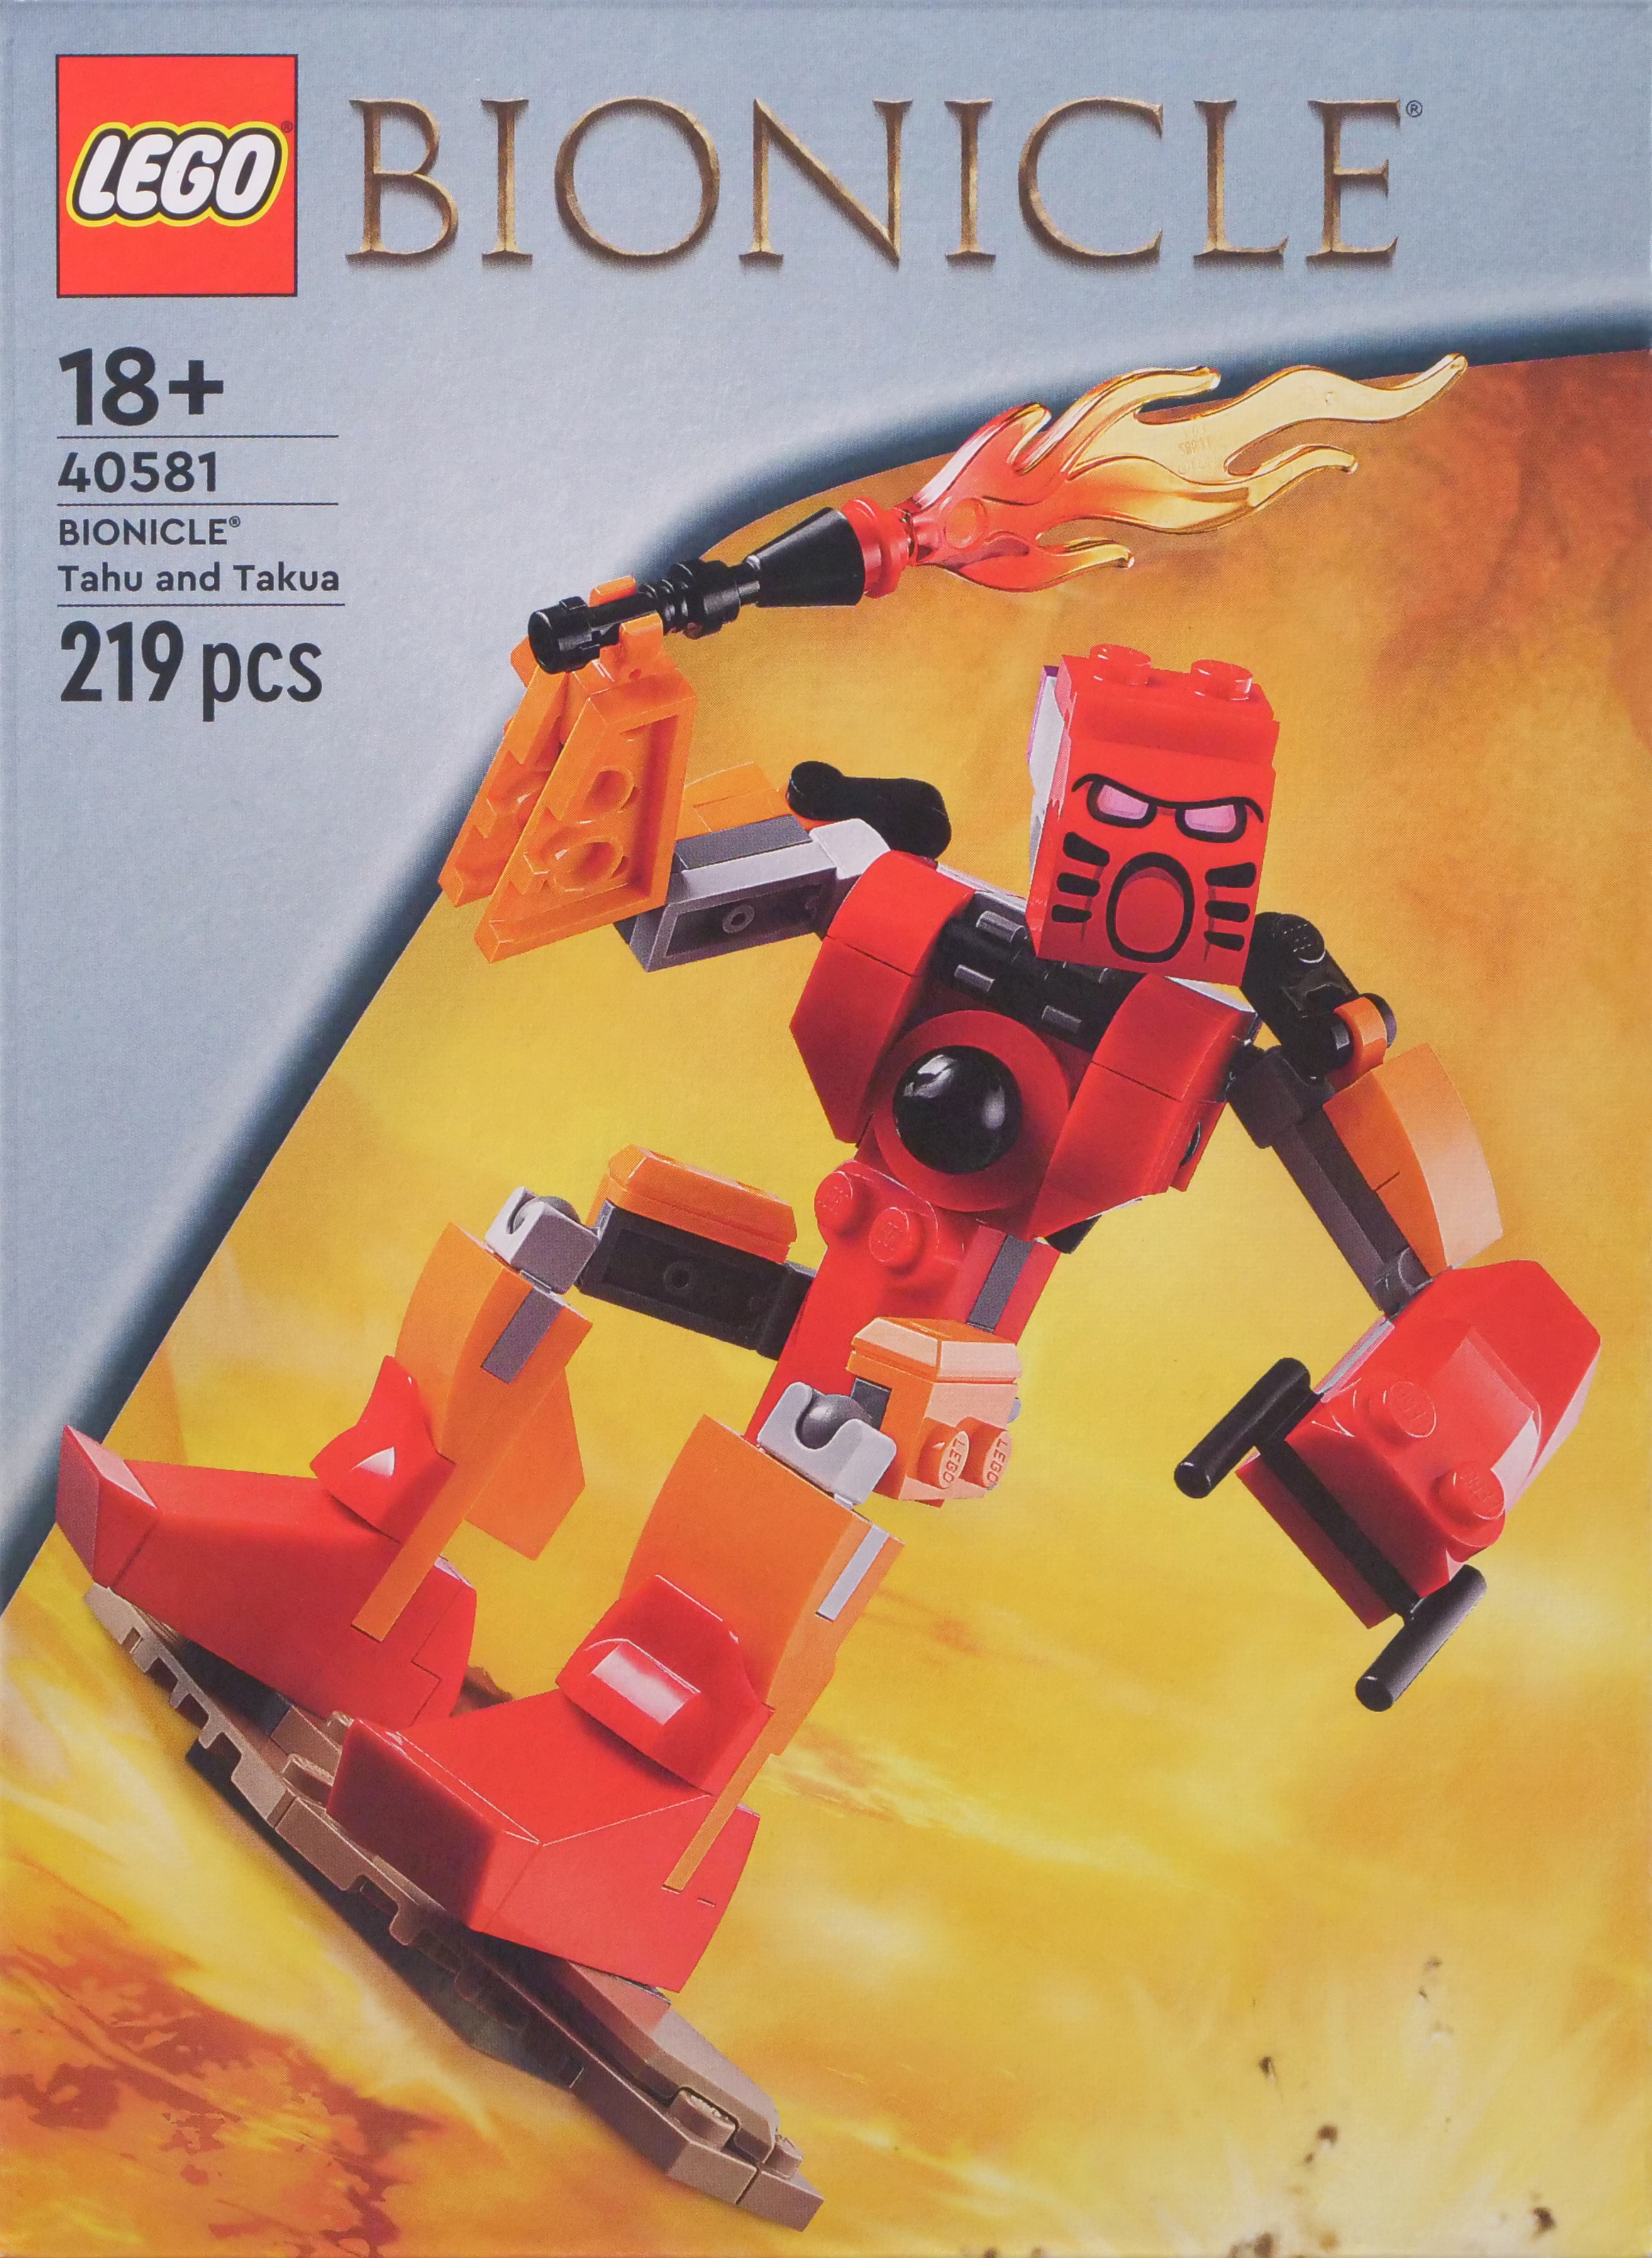 French Days : Ce set LEGO rare est en promo 